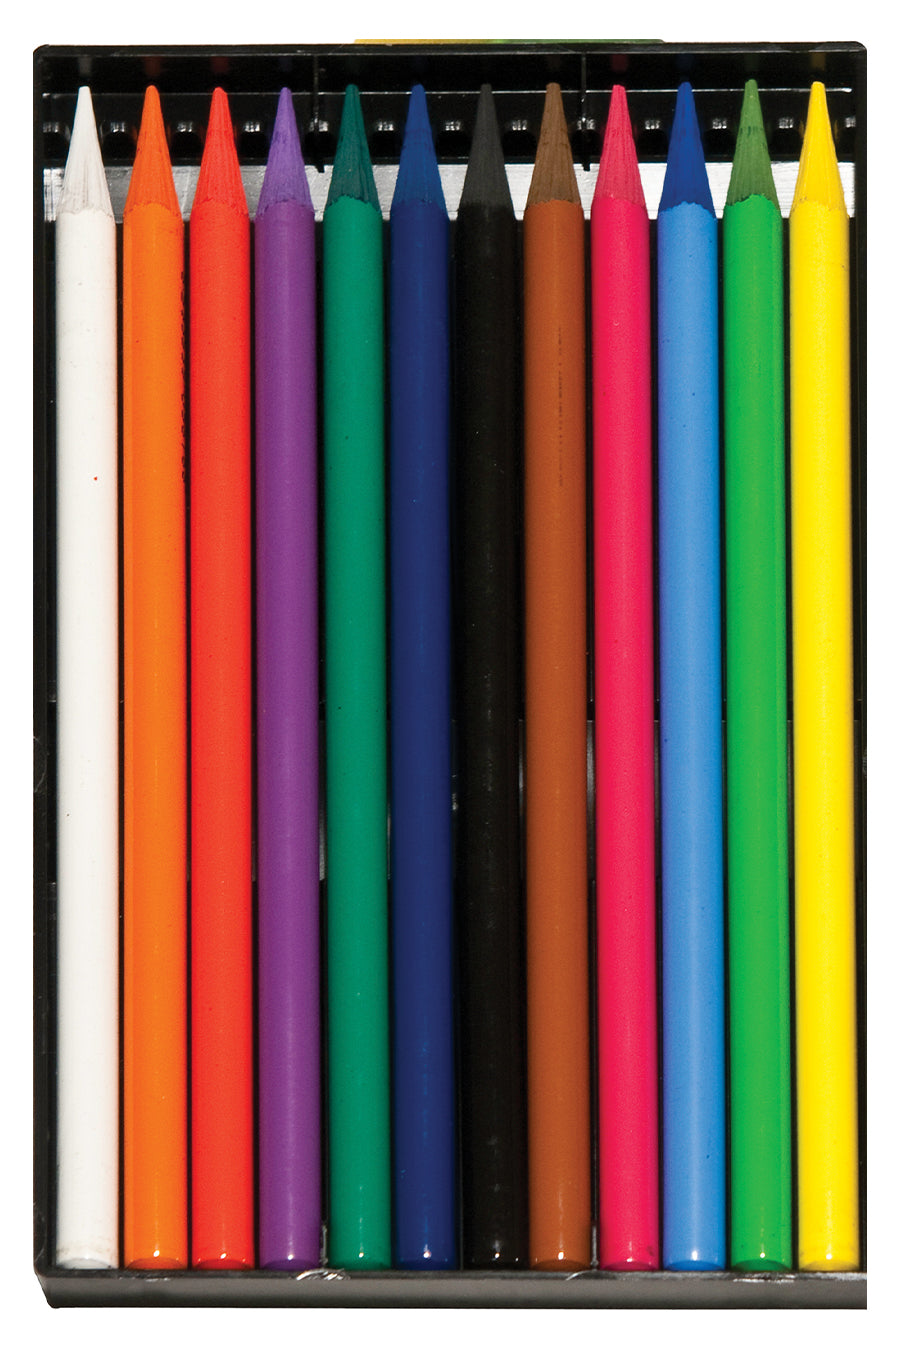 Senjay Wooden Colored Pencils,Mini Colored Pencils,Professional